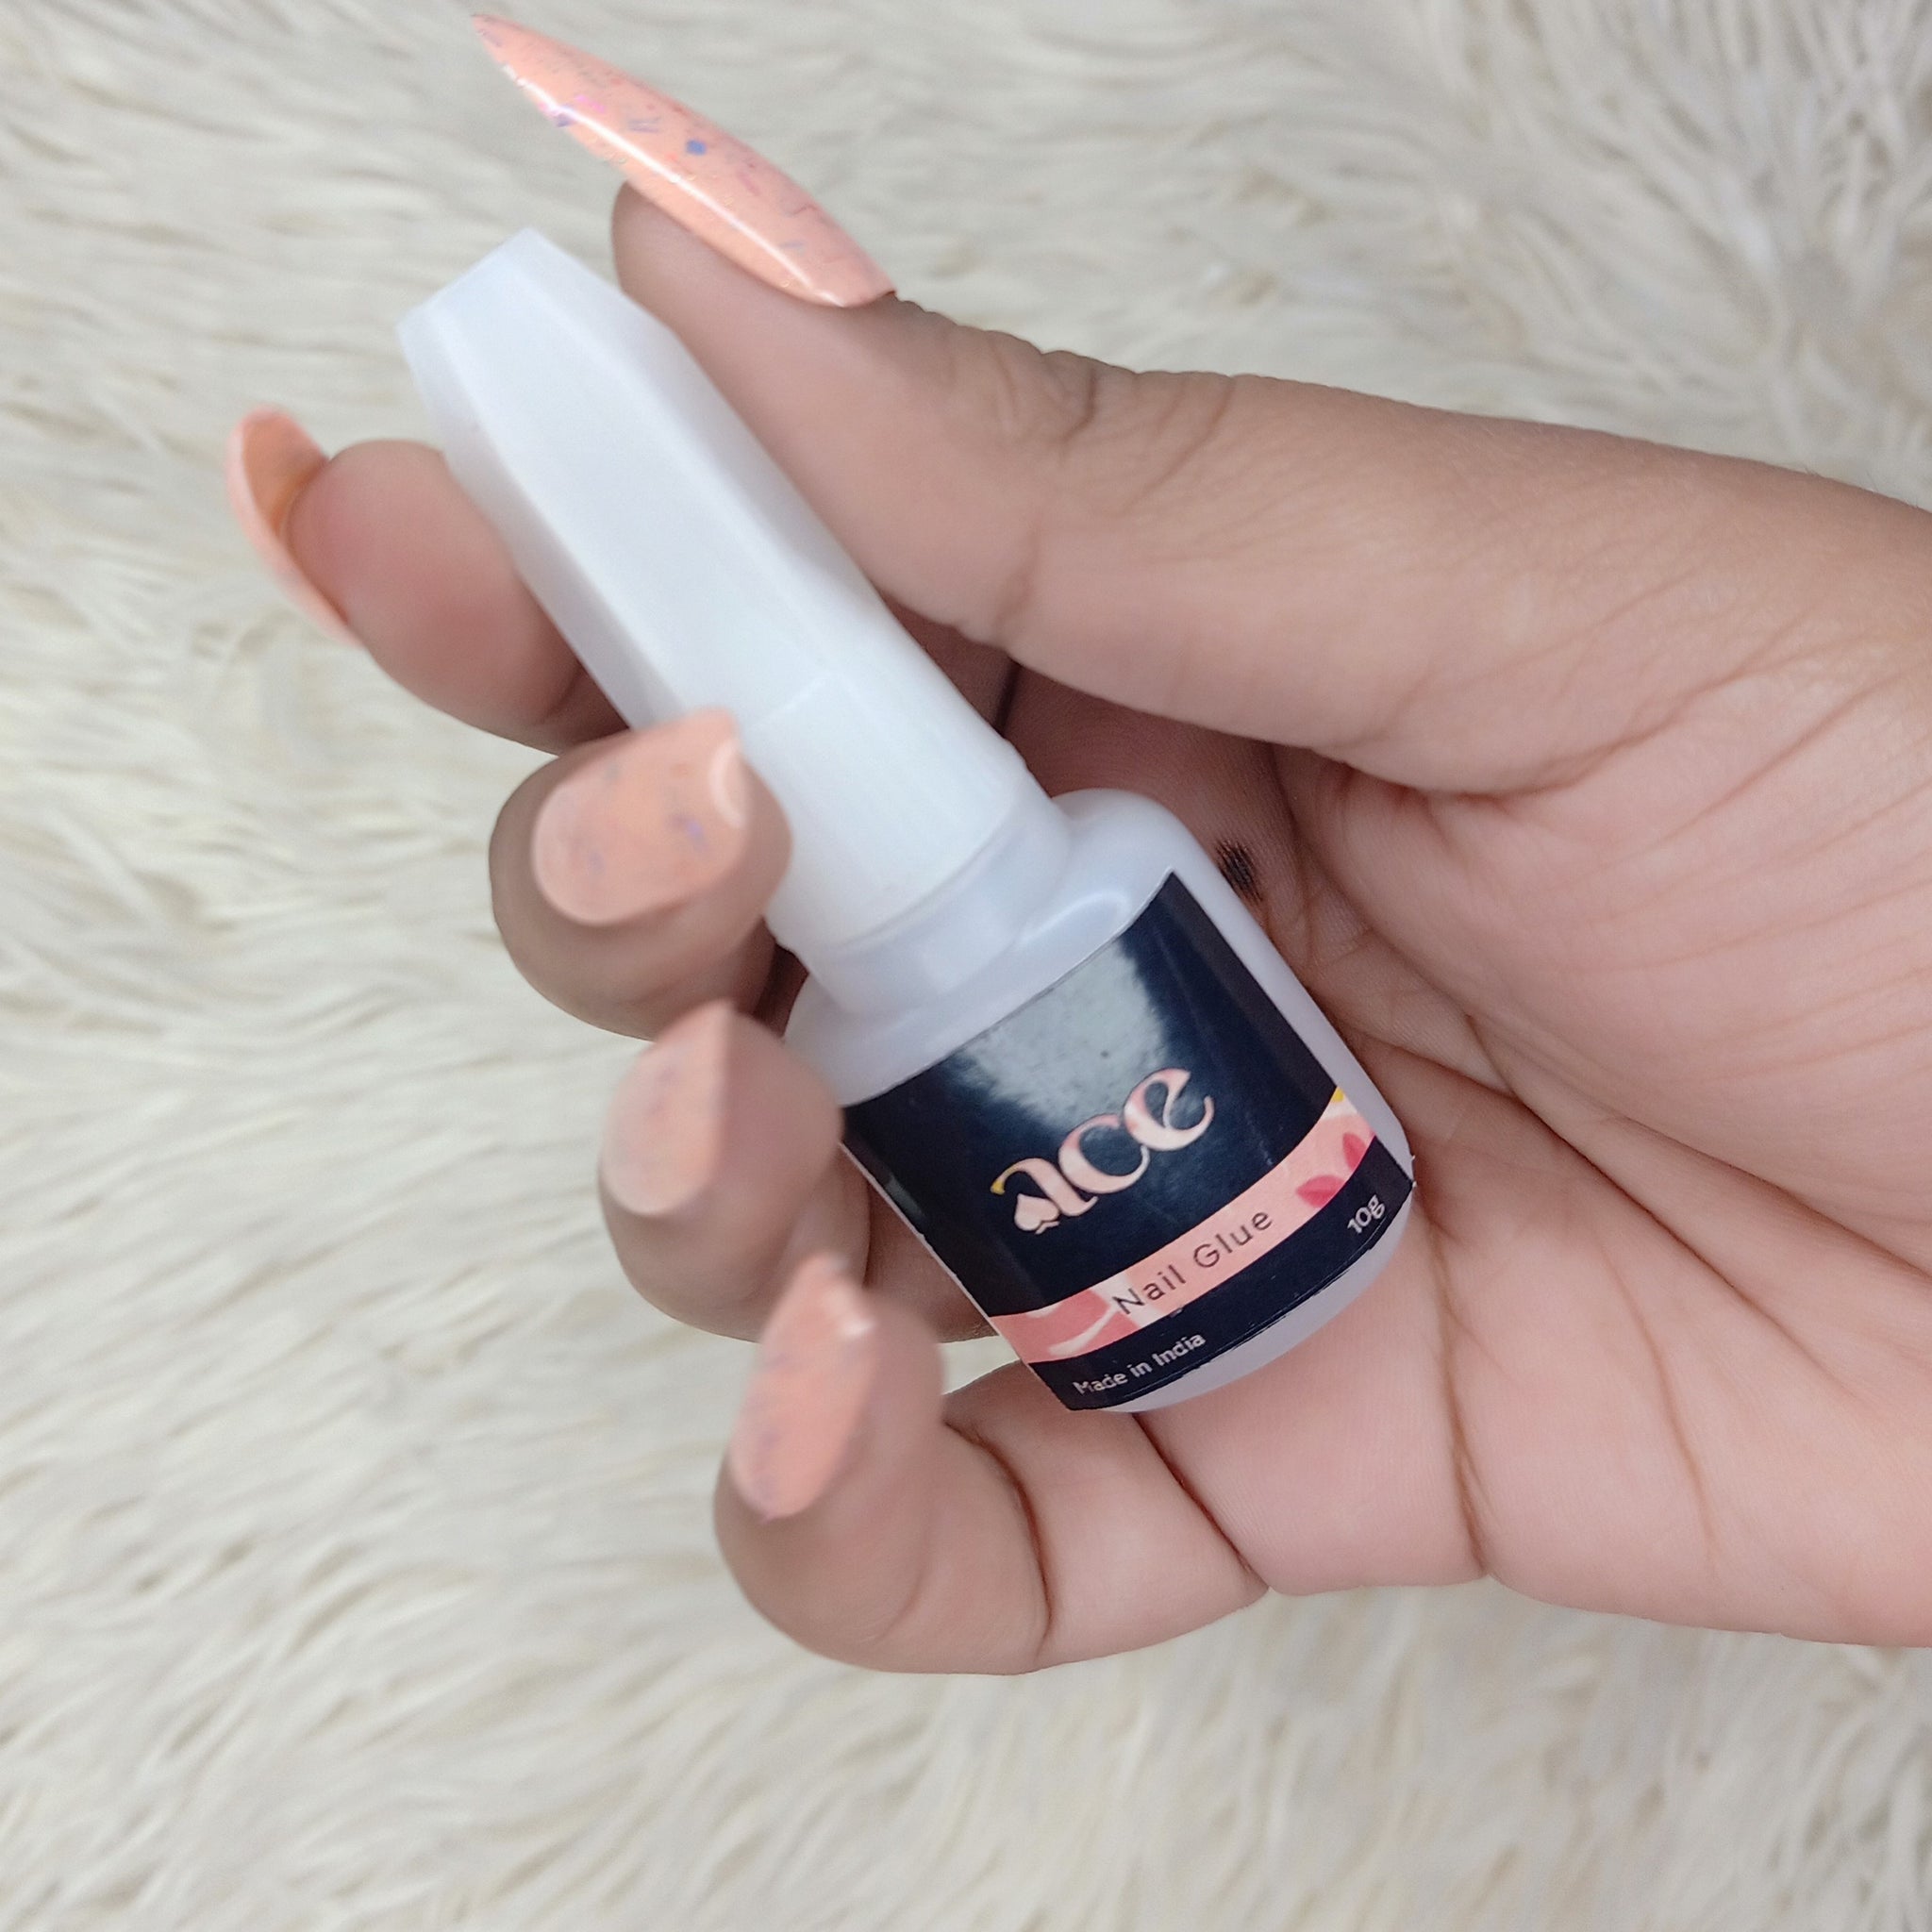 Plethora 3 Pcs Nail Glue For Artificial Nail Waterproof Nail Adhesive  Bottle Acrylic nails Professional Nail Art Gum Fake Nails Extension - Price  in India, Buy Plethora 3 Pcs Nail Glue For